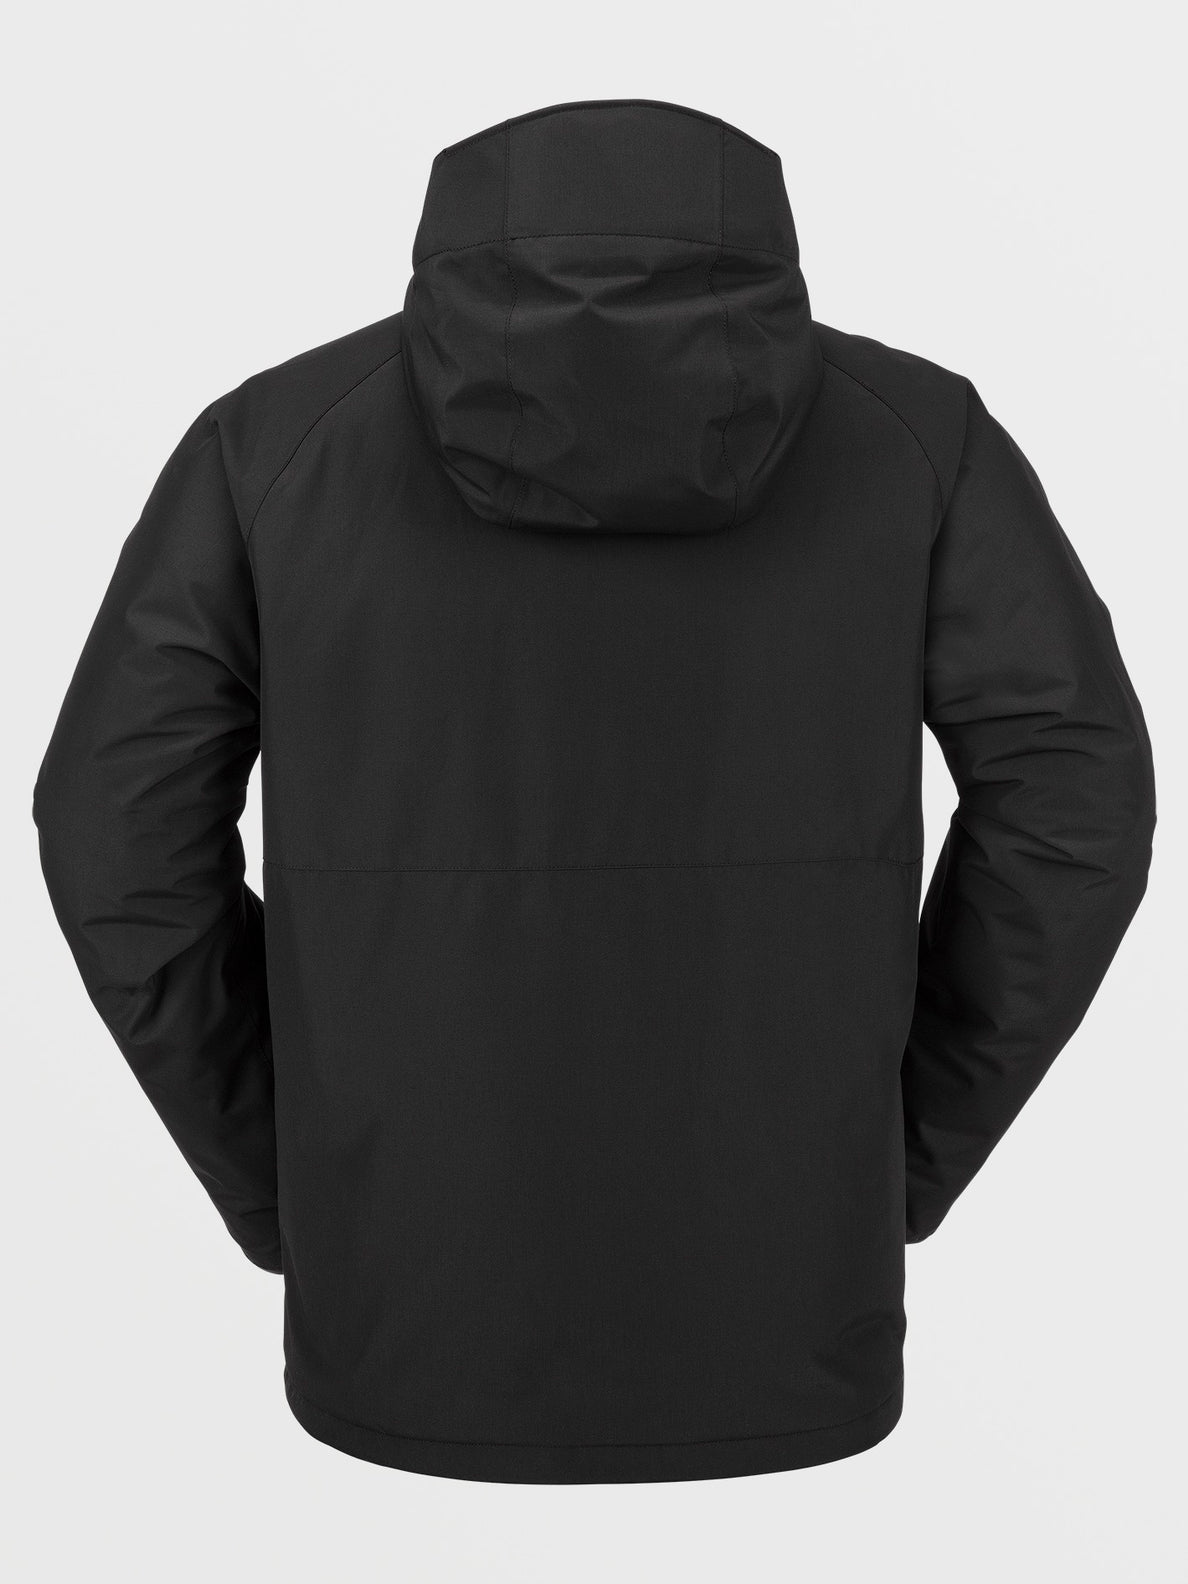 Mens 2836 Insulated Jacket - Black (G0452408_BLK) [B]